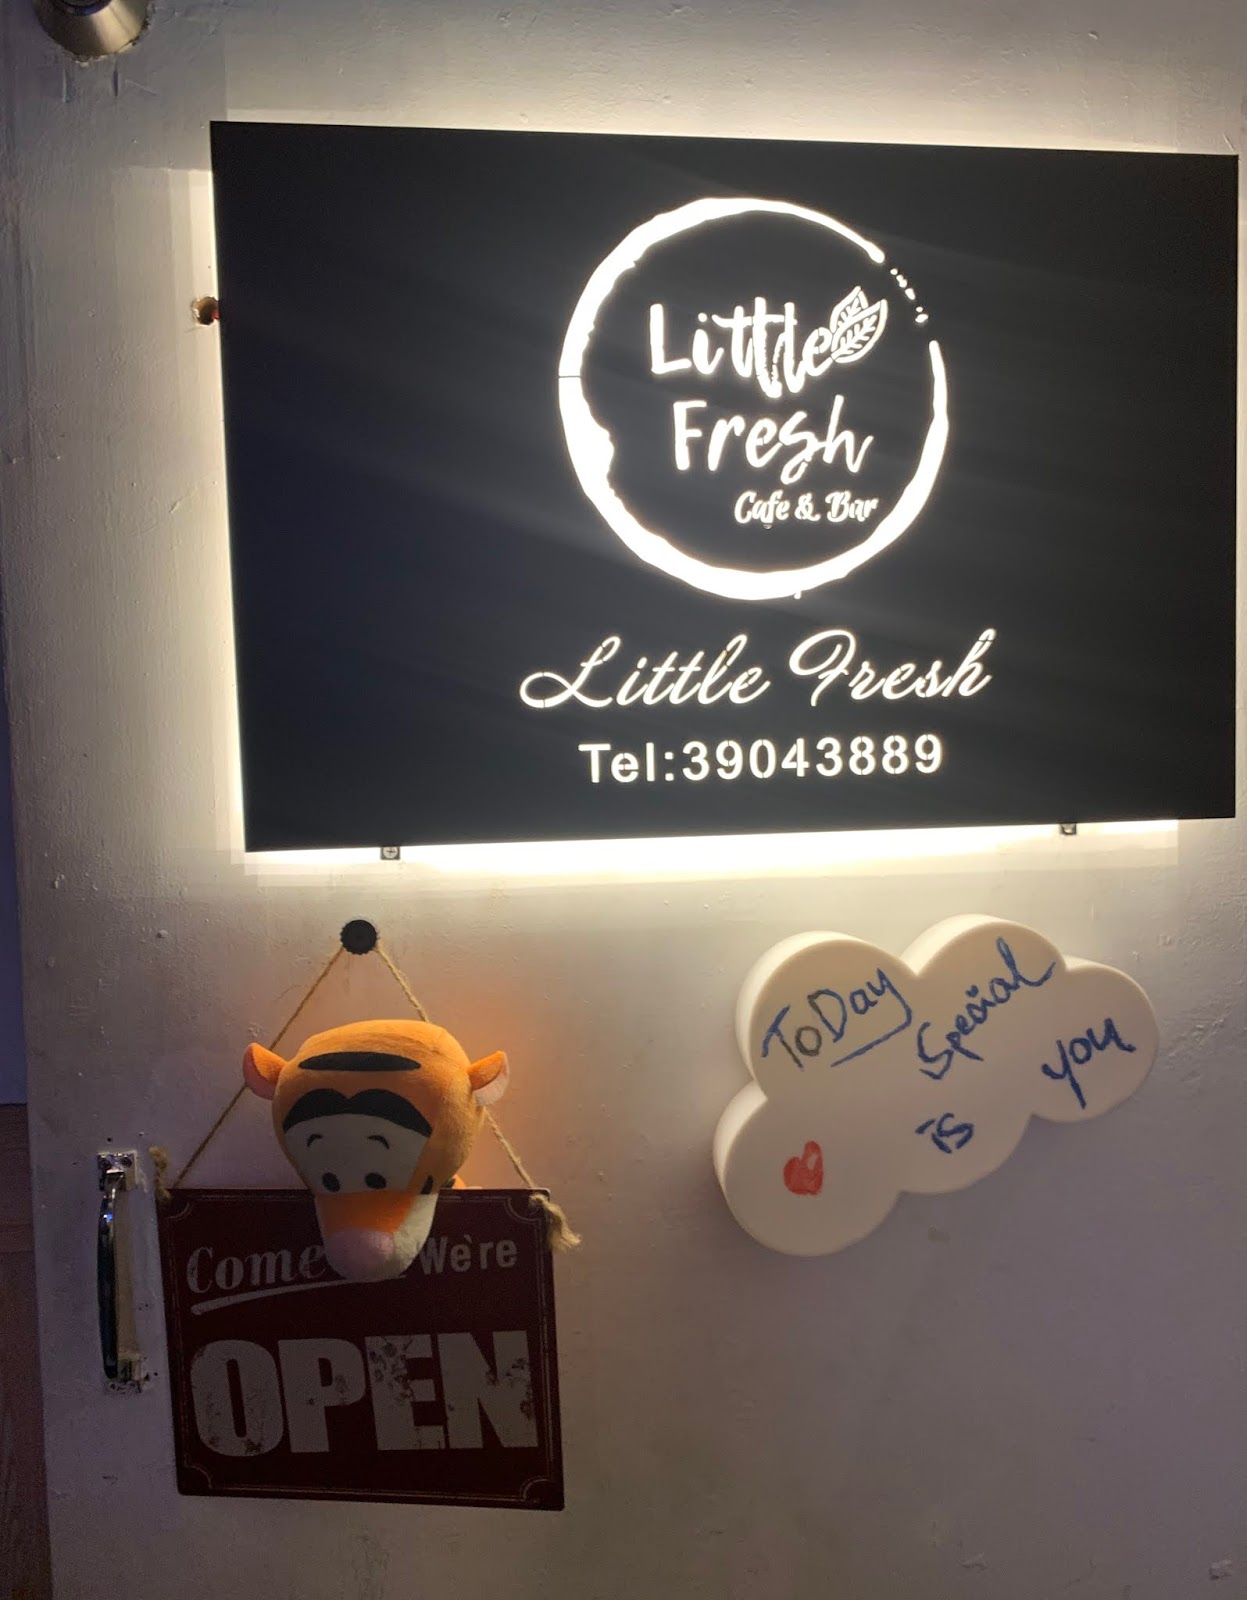 ◕◡◕超高質樓上café ♥Little Fresh Cafe & Bar